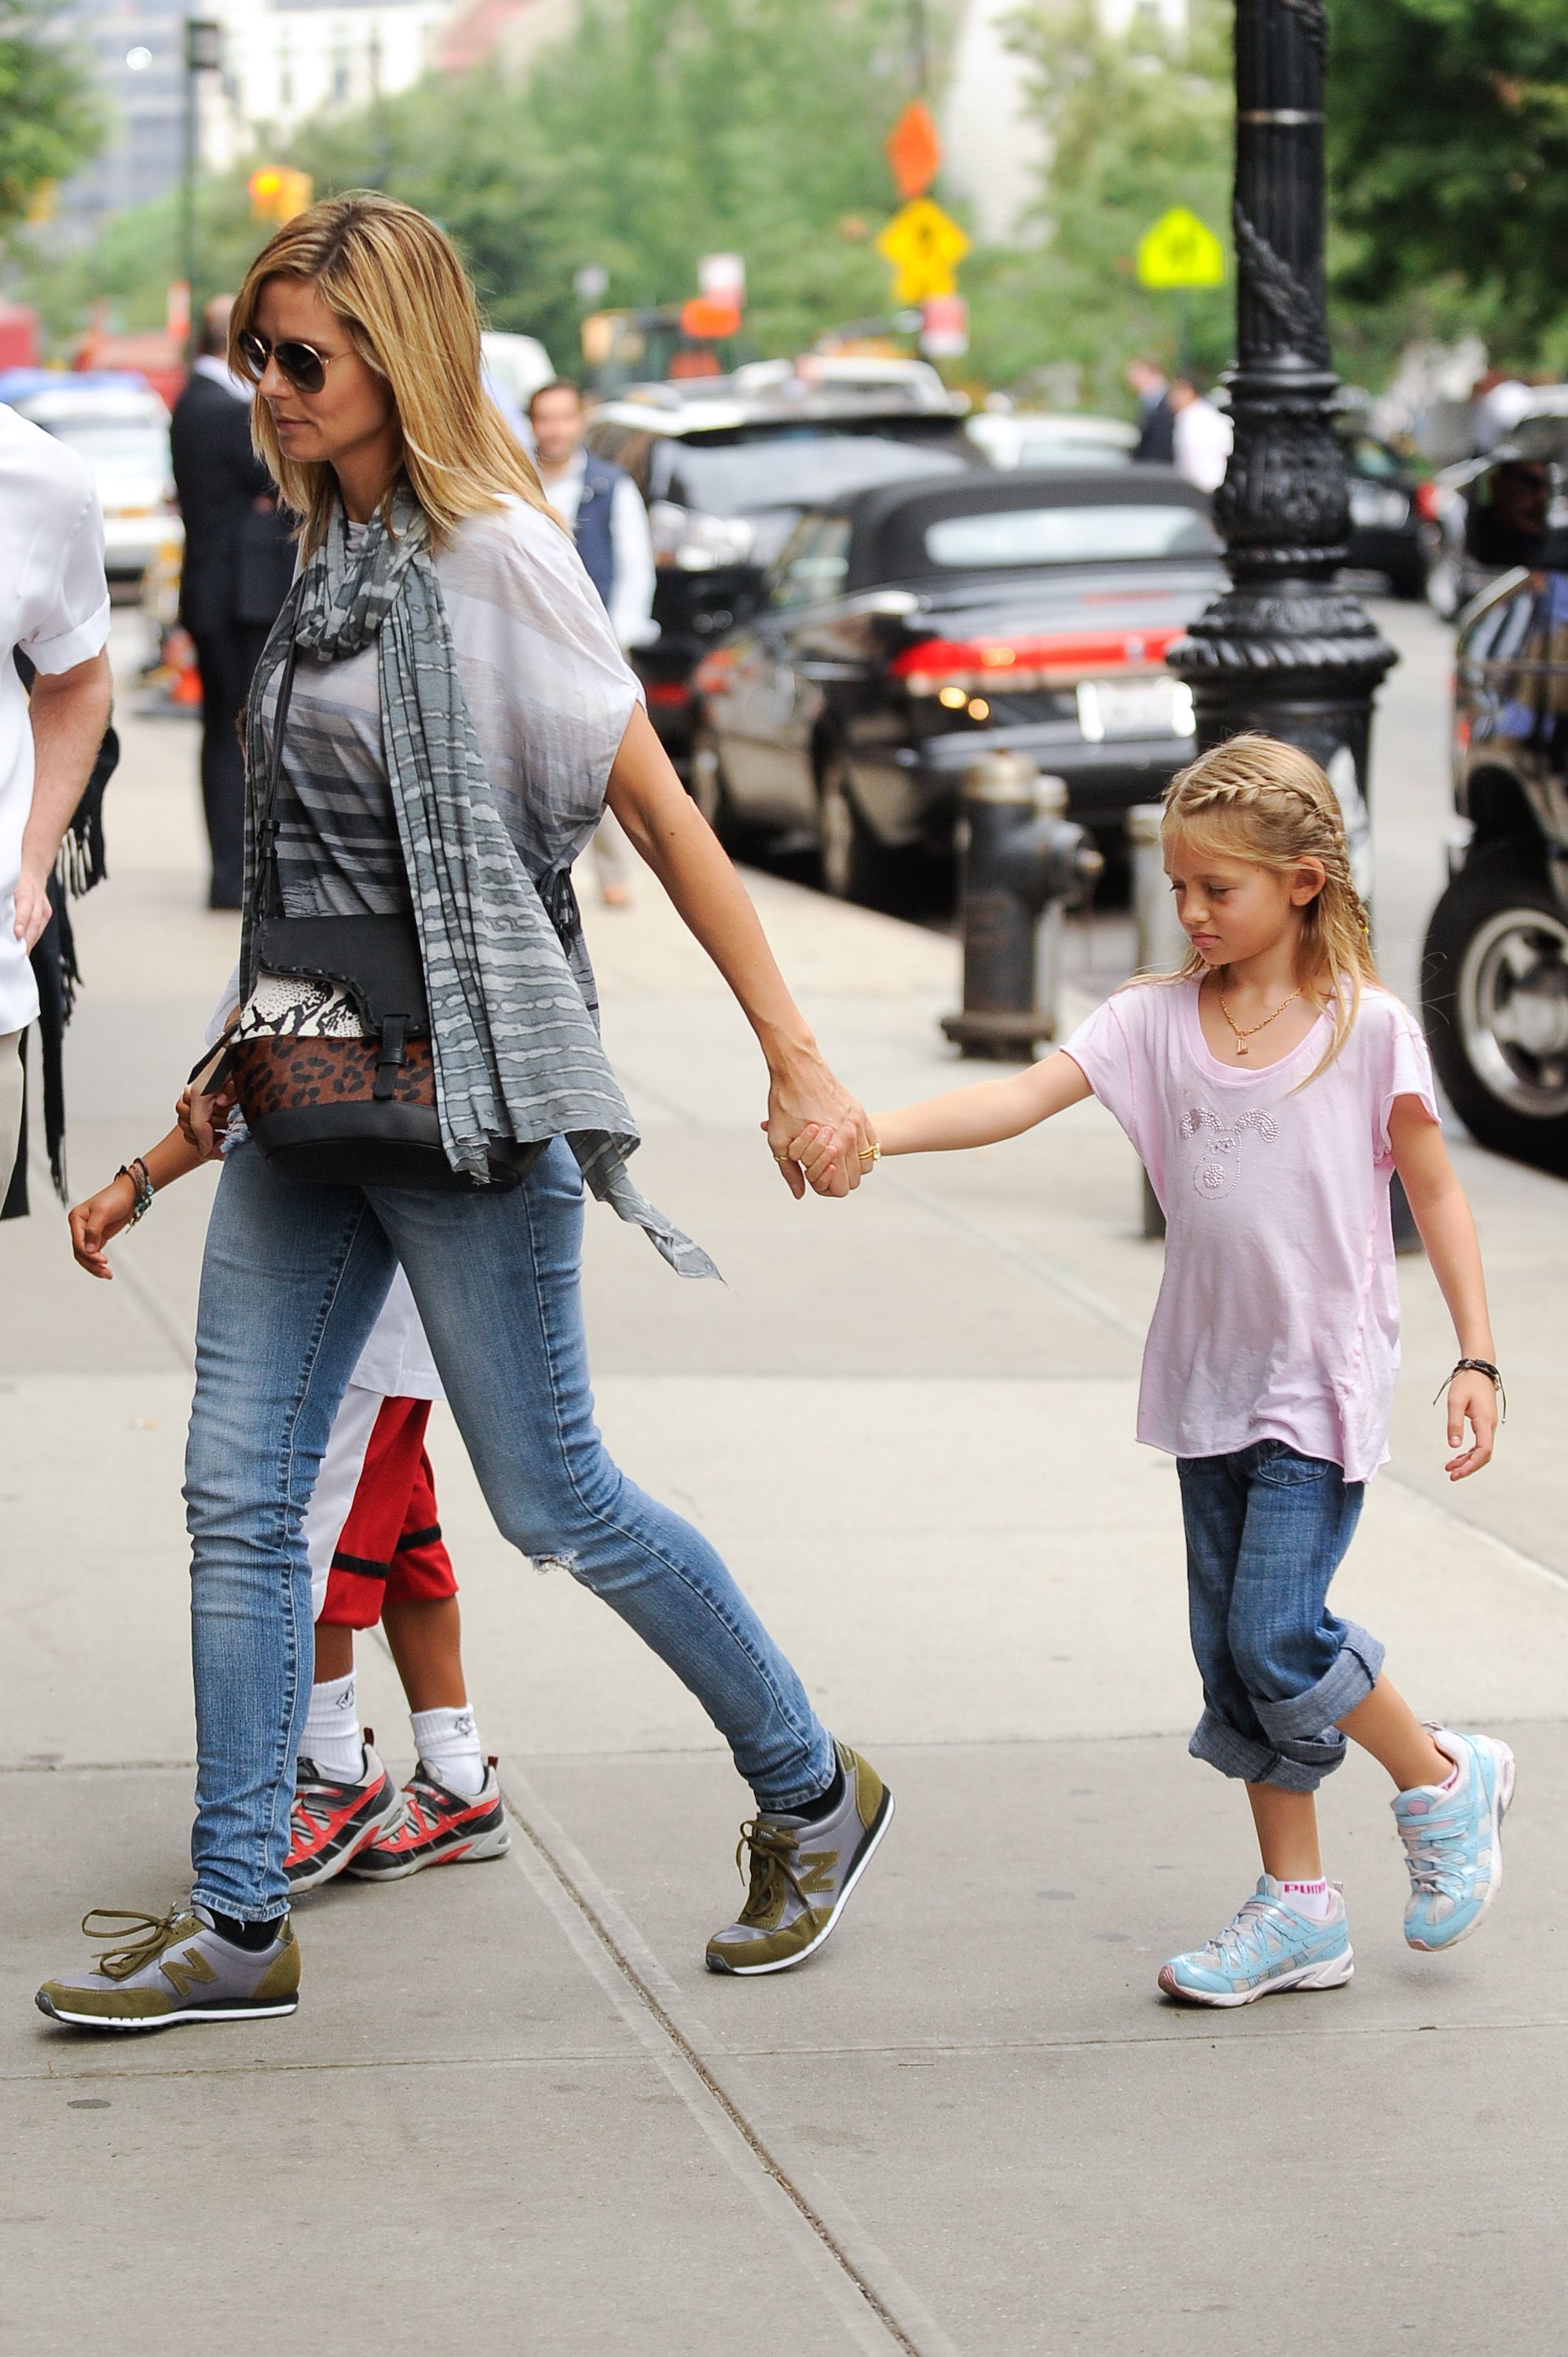 Heidi Klum and her daughter Leni Samuel in New York City in June 2011 | Source: Getty Images